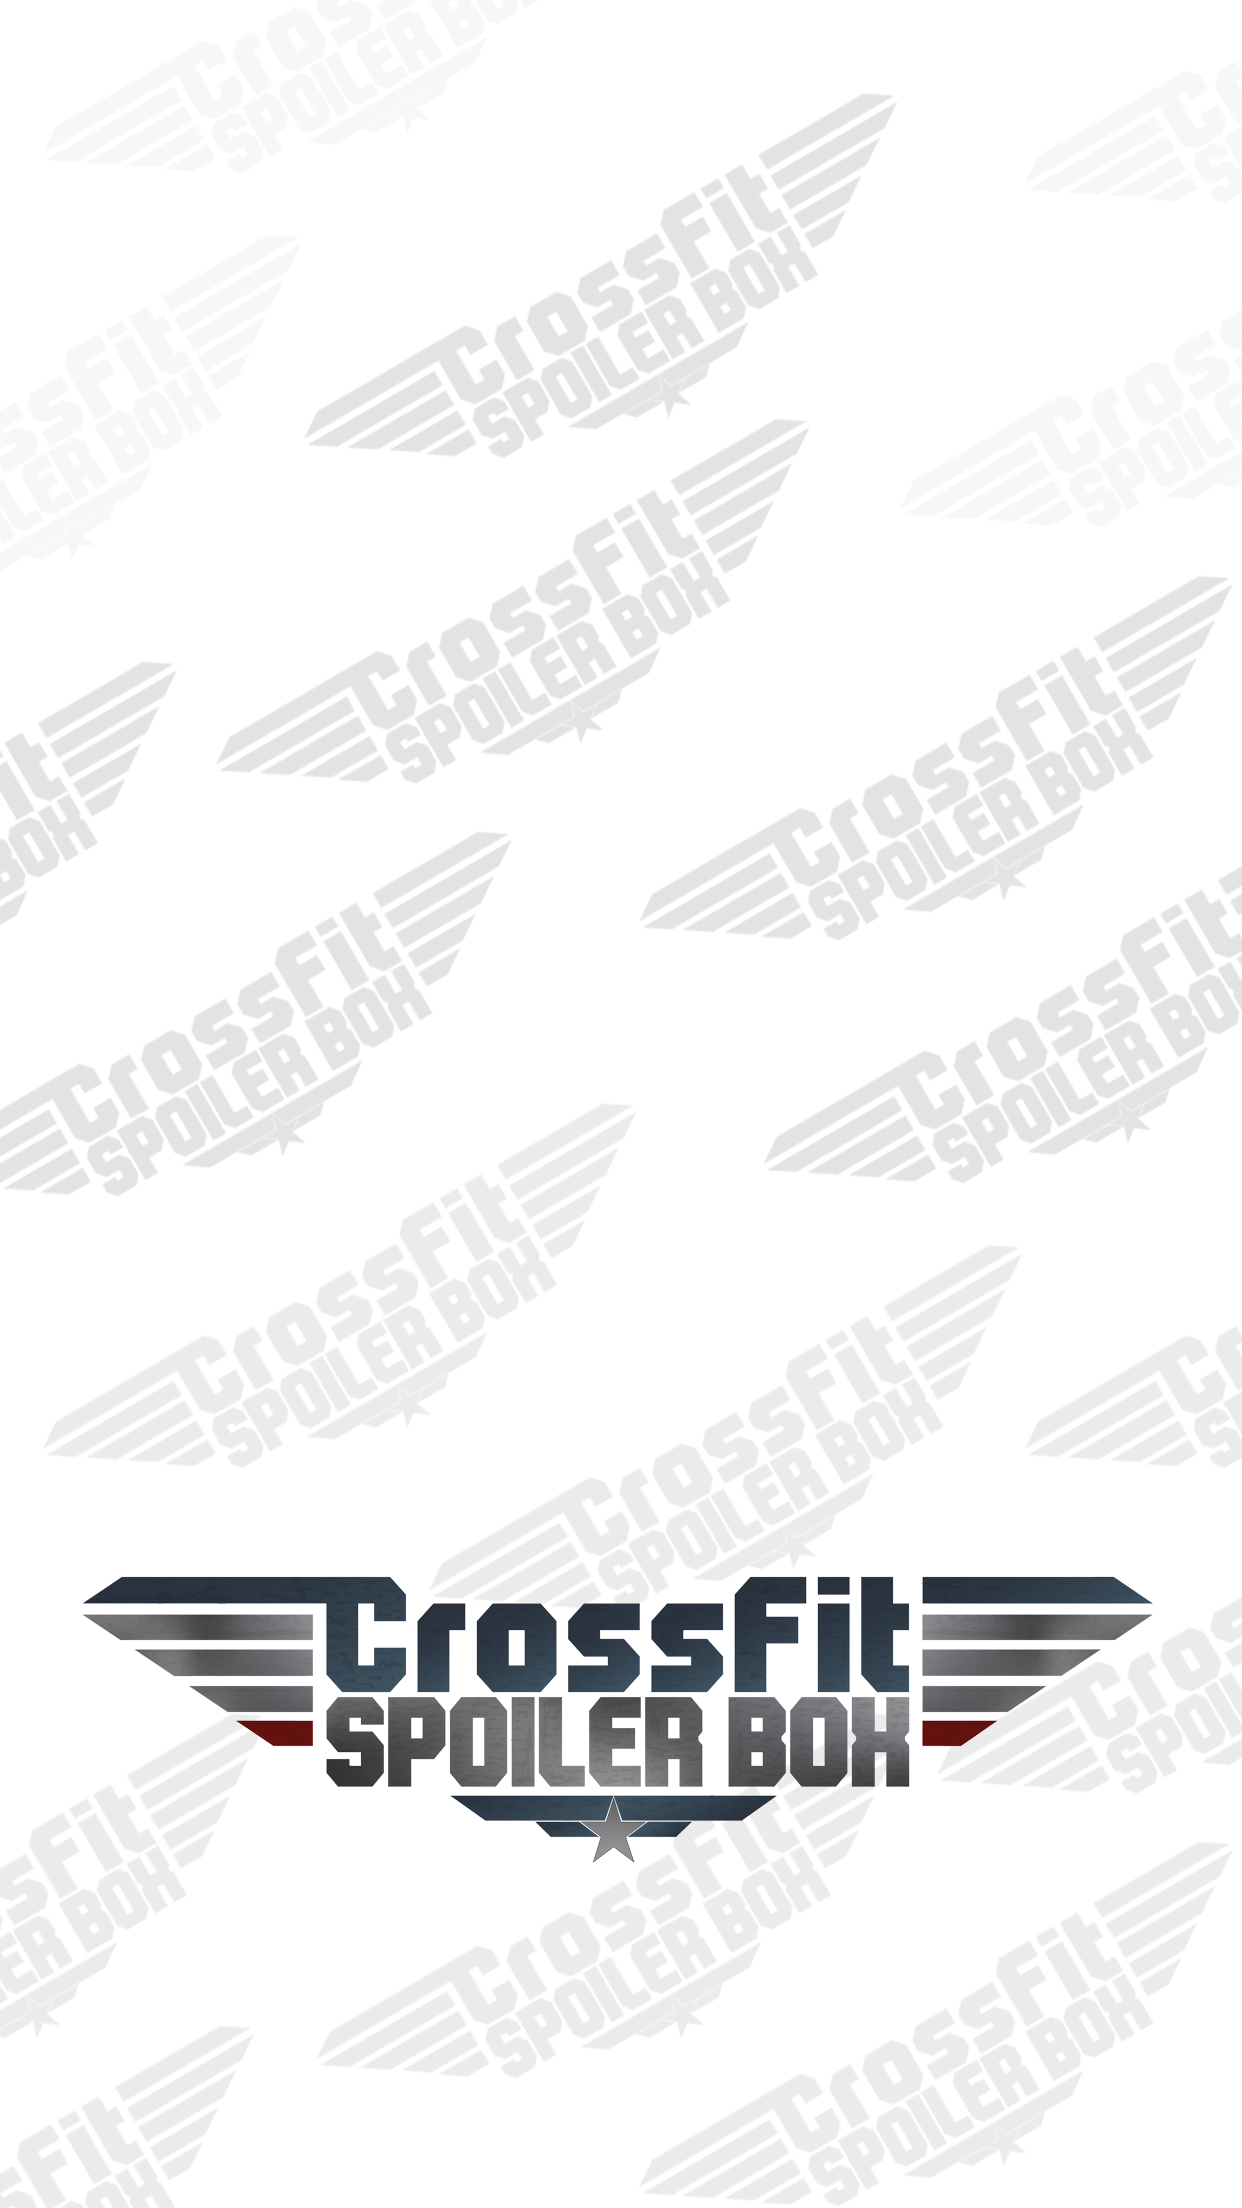 Fondos de Pantalla - Spoiler Box CrossFit